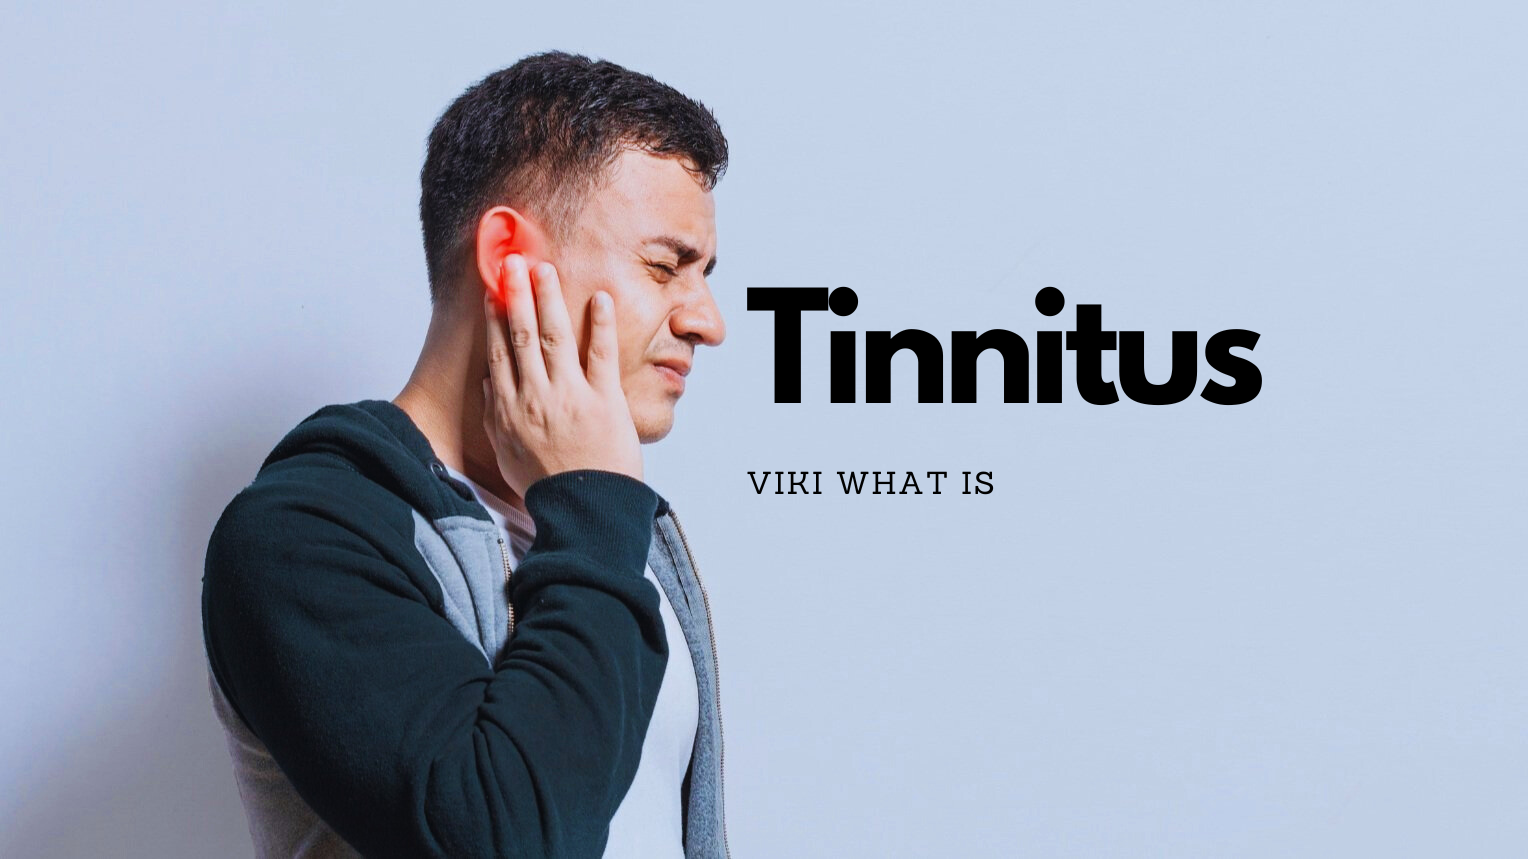 How to Pronounce Tinnitus